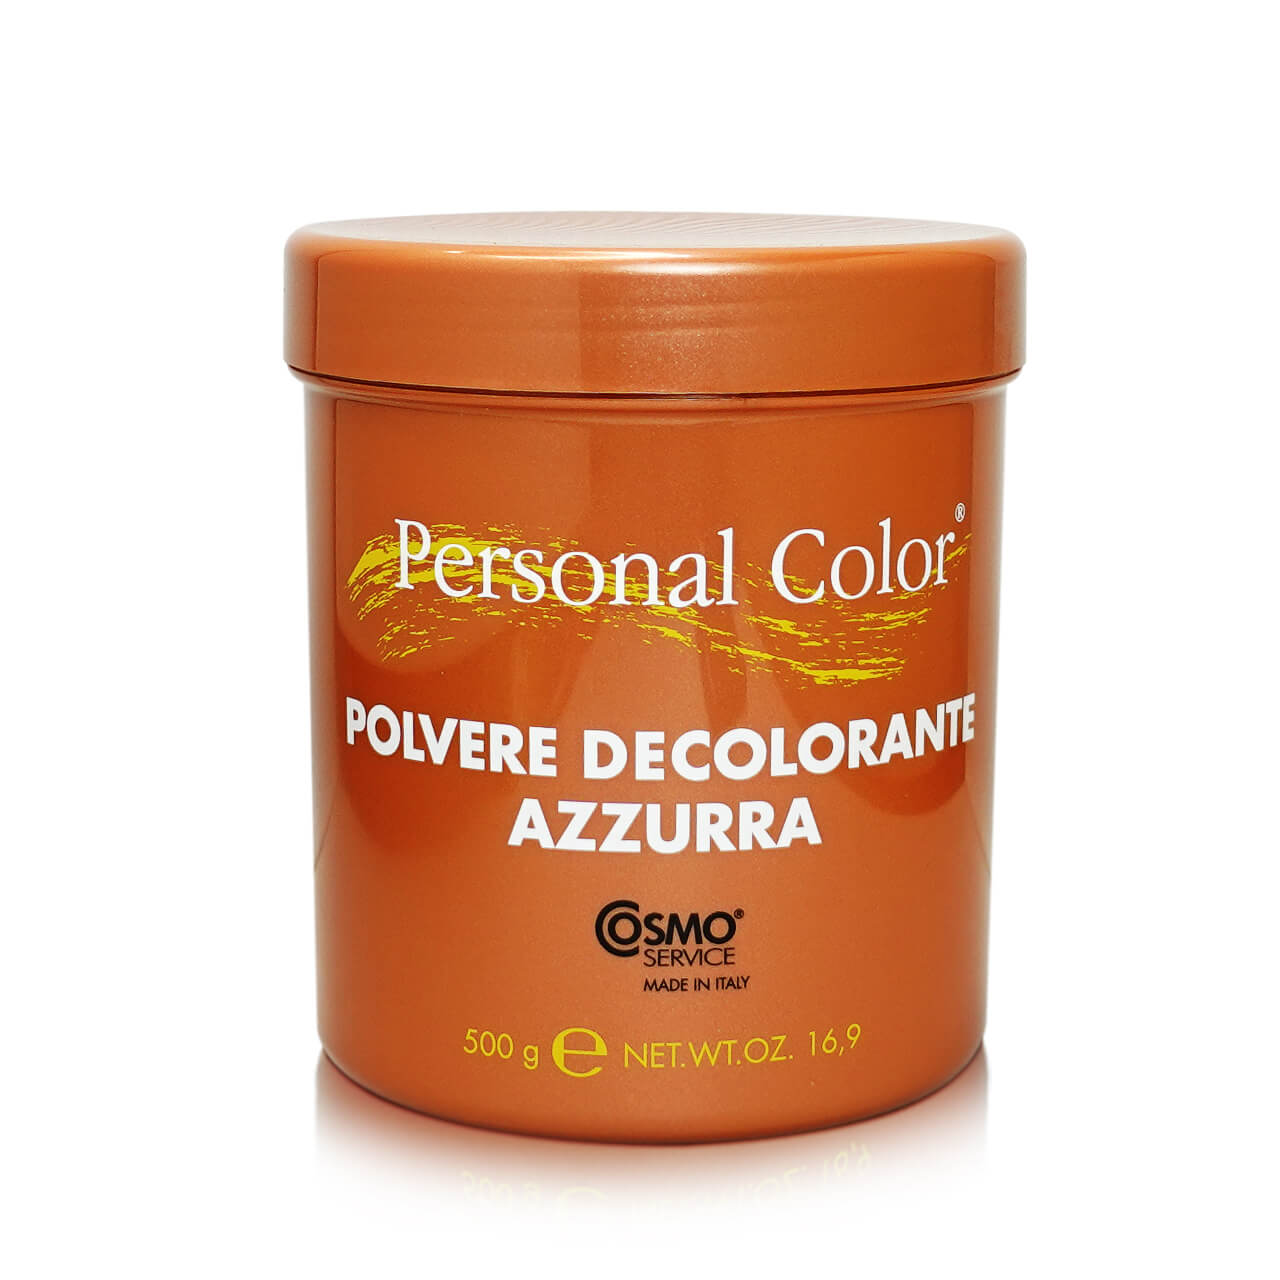 23-8029620004078-PC-CS-226L Personal Color Bleaching Powder AzzurraBlue 500g.